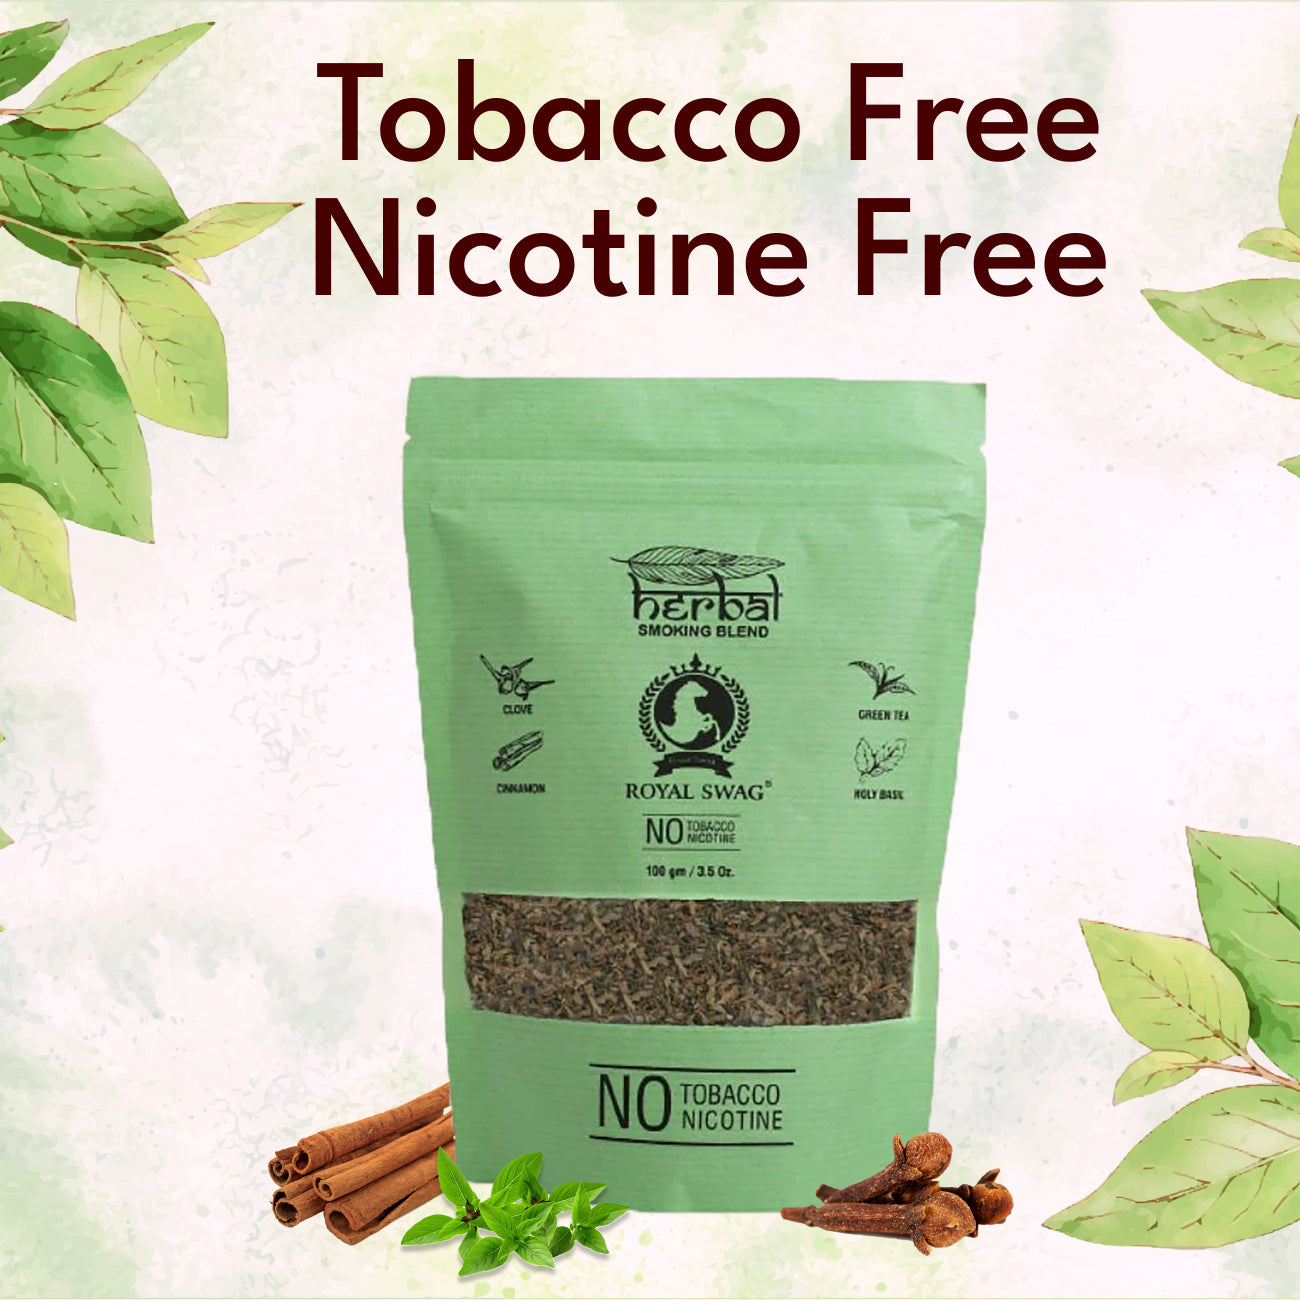 Tobacco & Nicotine Free Herbal Smoking Blend - 1 Pack (3.5 Oz/ 100G)